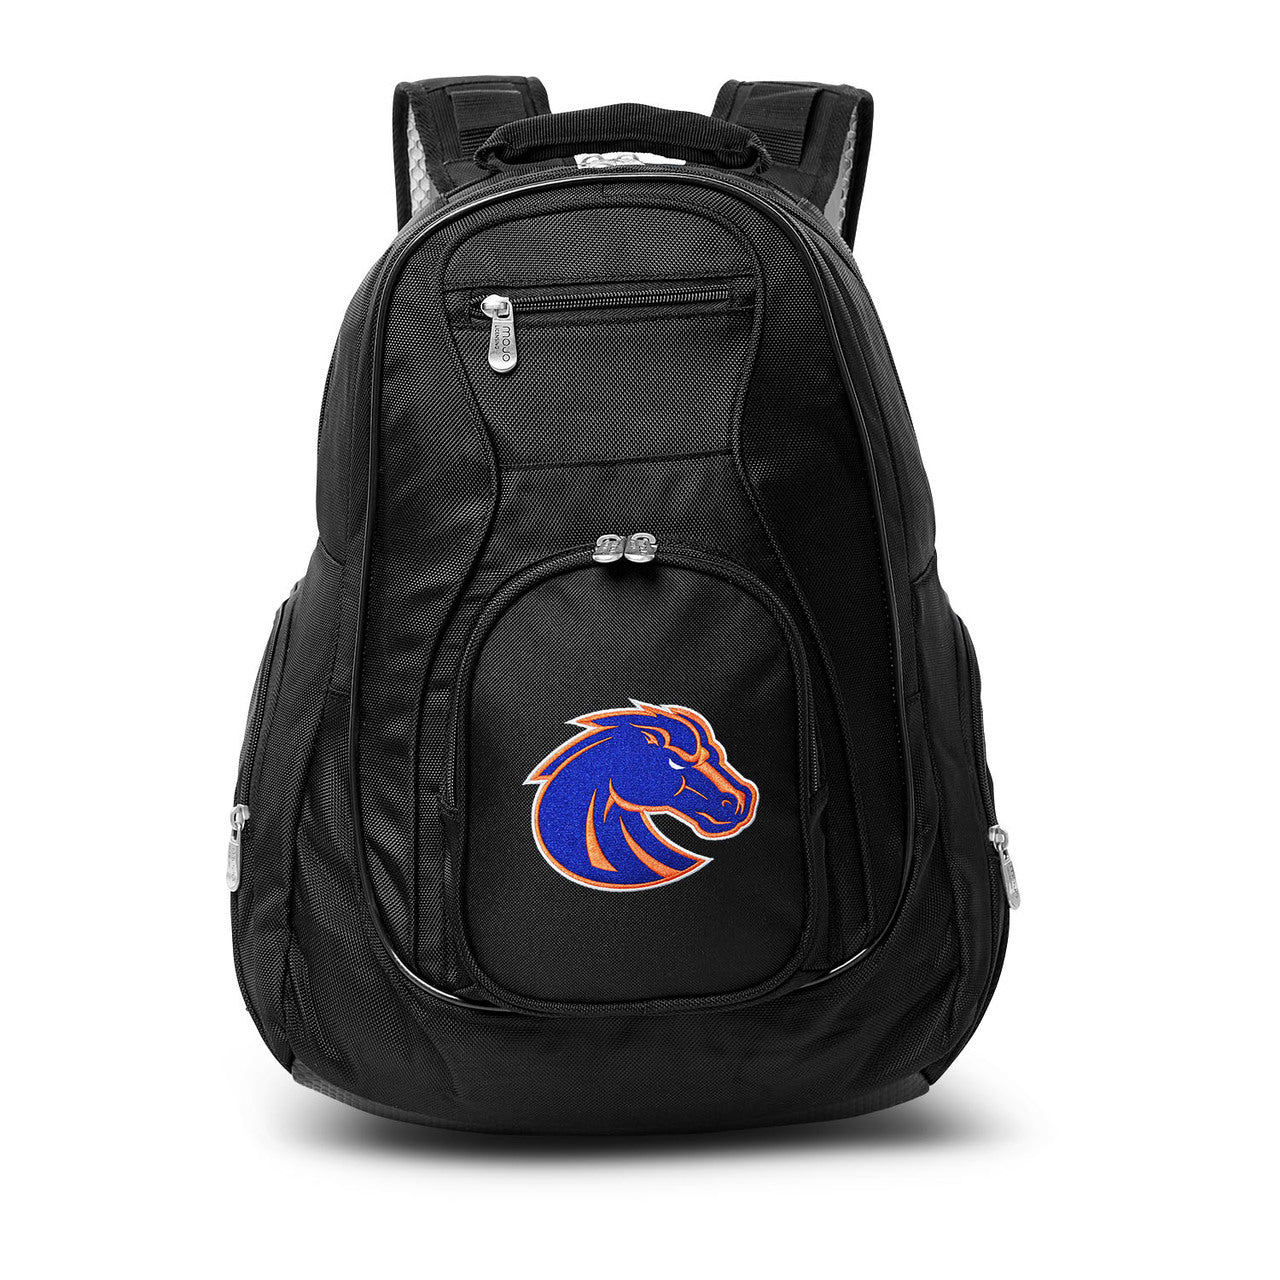 Boise State Broncos Laptop Backpack in Black